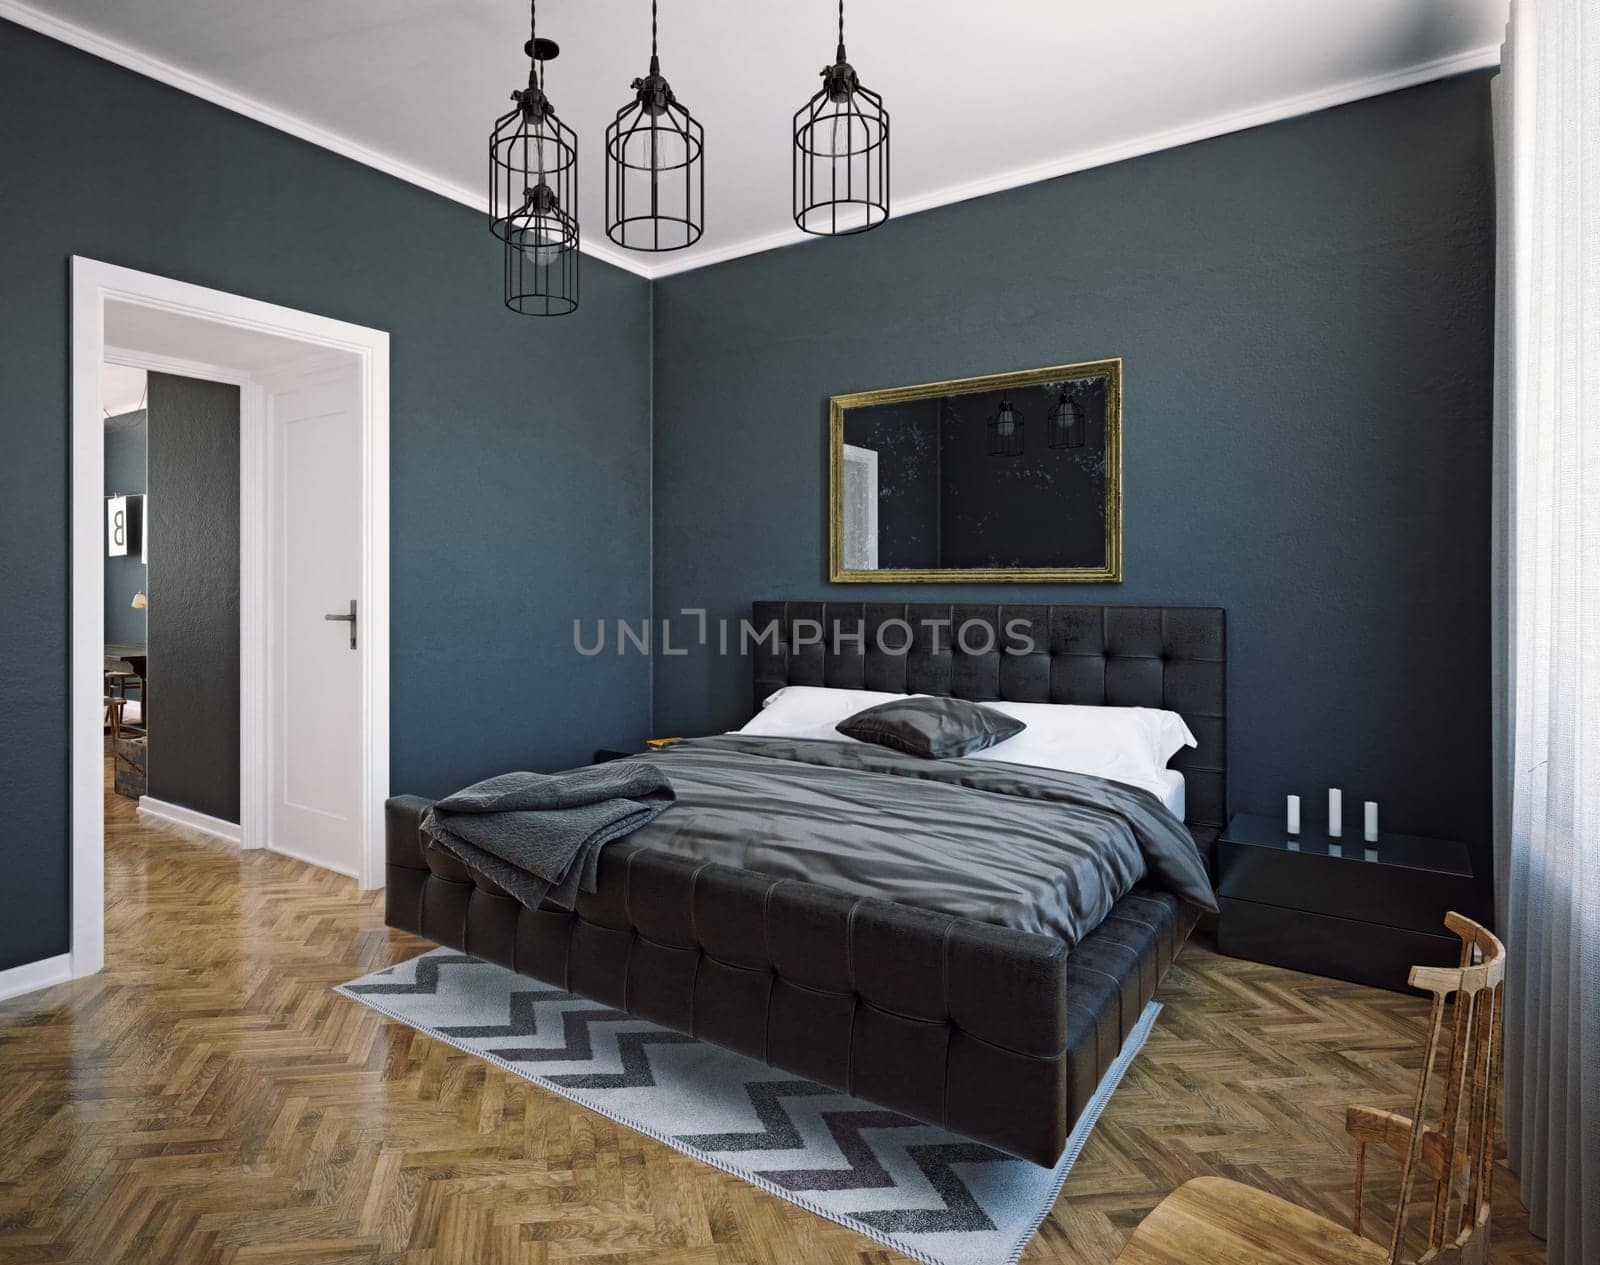 modern dark style bedroom interior design. 3d rendering room concept